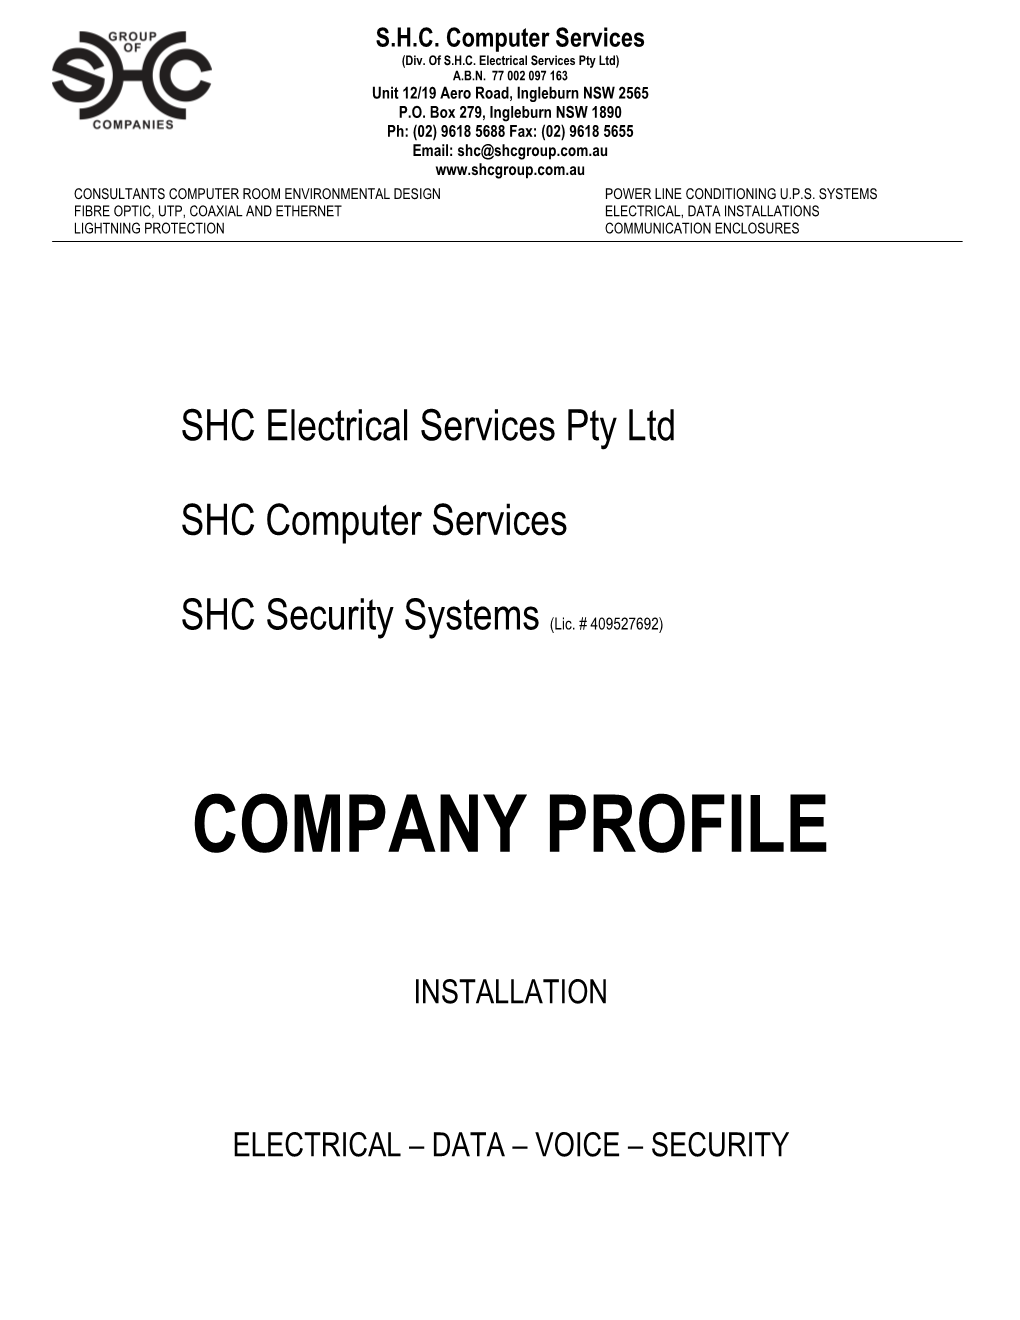 SHC School Profile